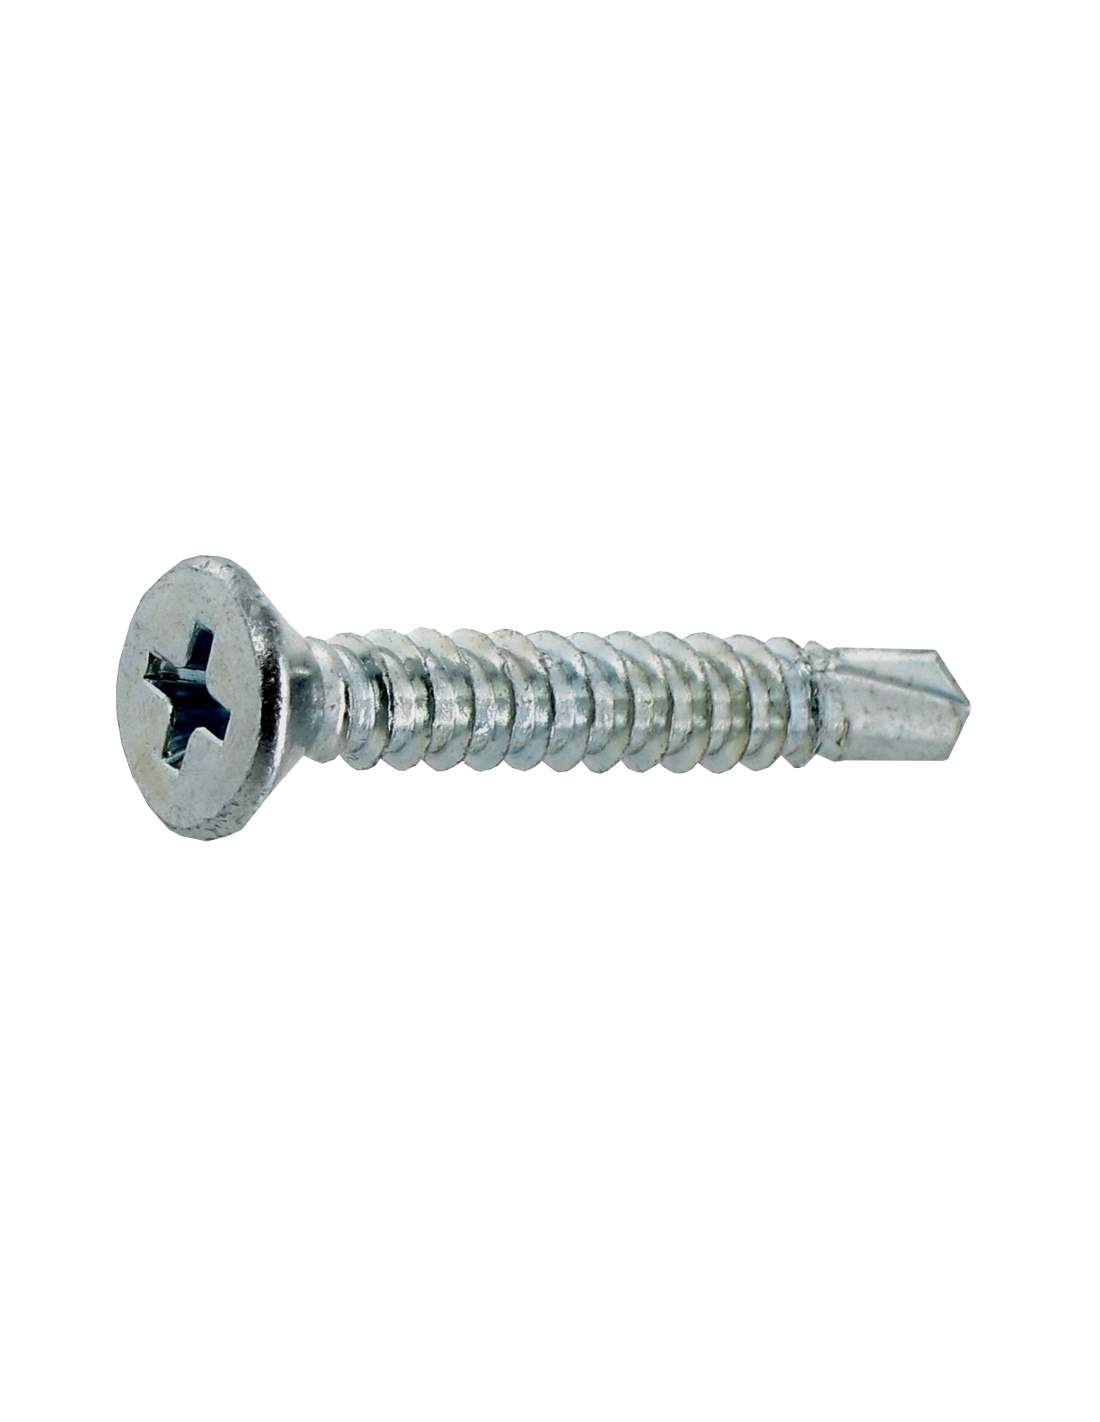 AZI 4.8x32 self-drilling countersunk-head tapping screws, 10 pcs.